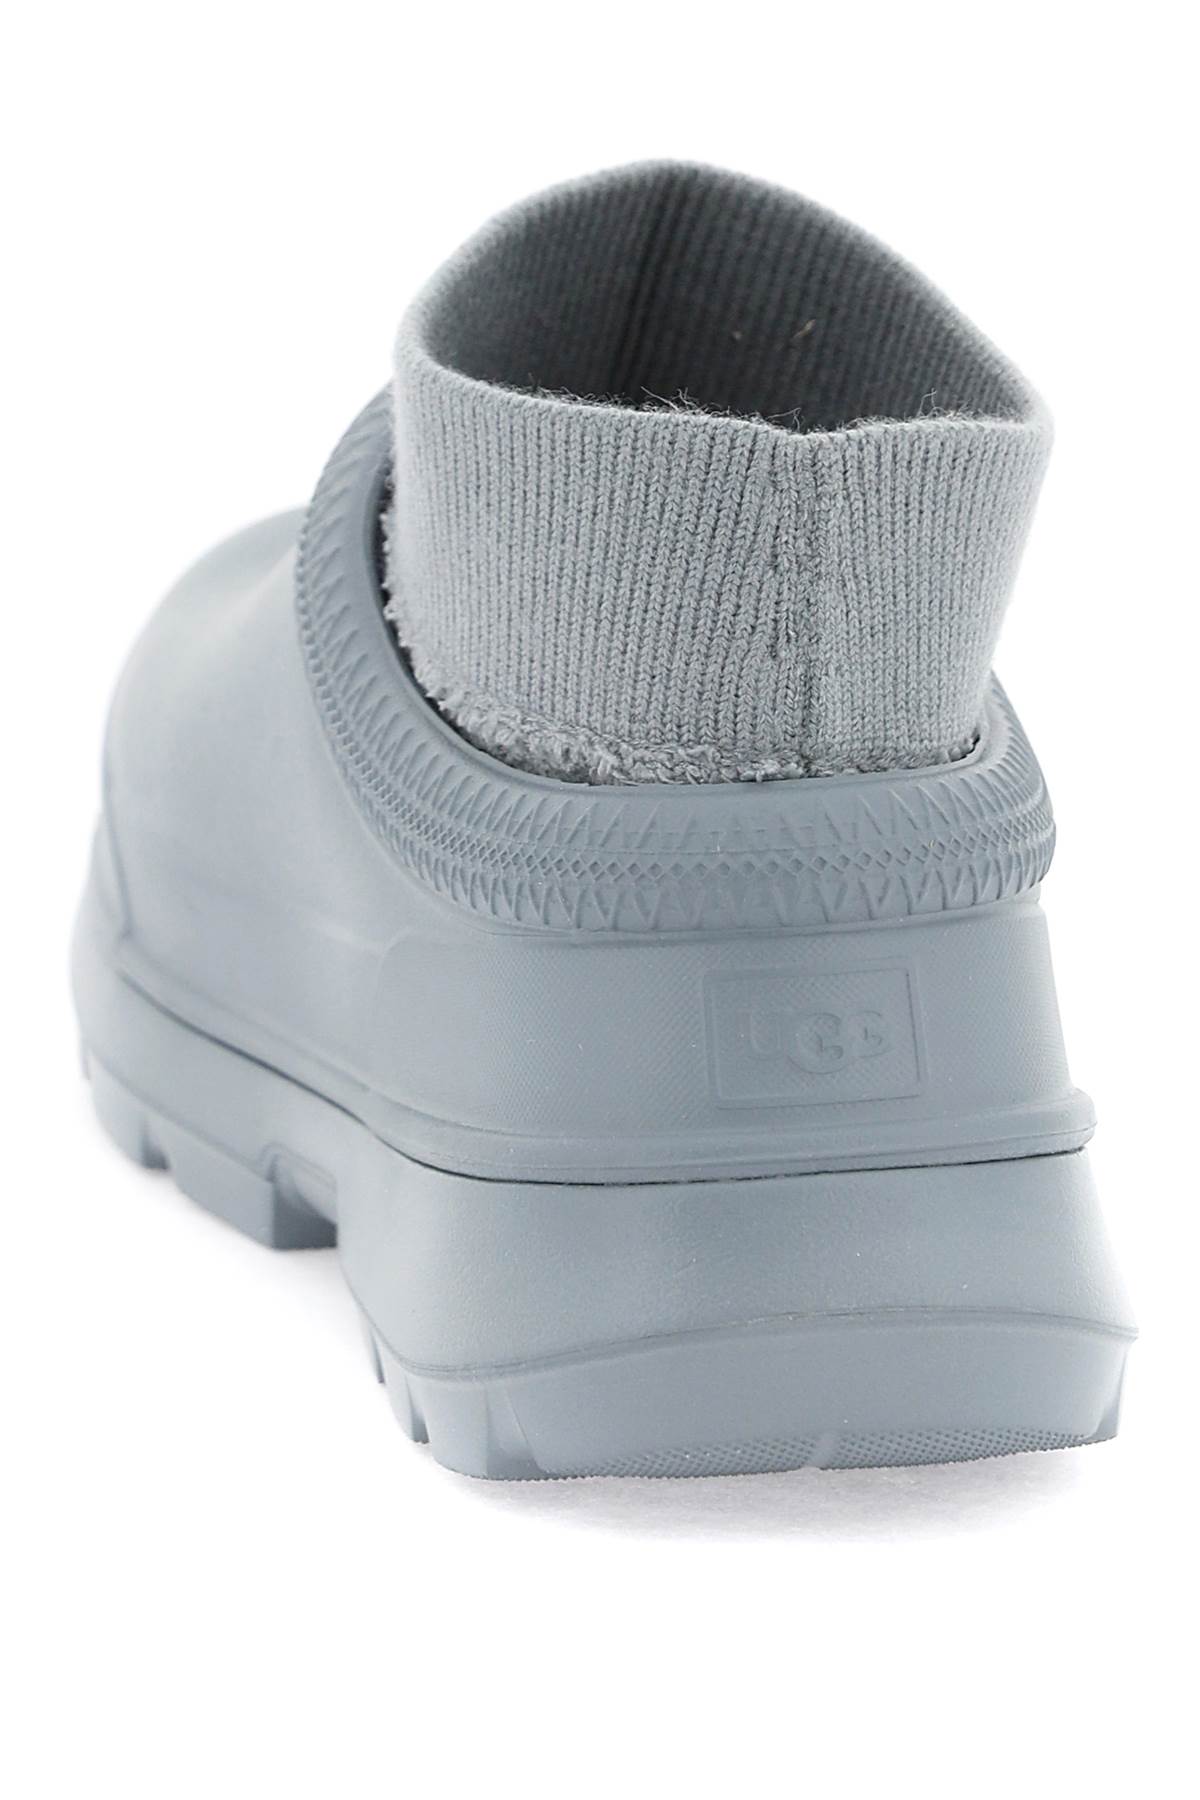 Ugg Tasman X Slip On Shoes   Grey